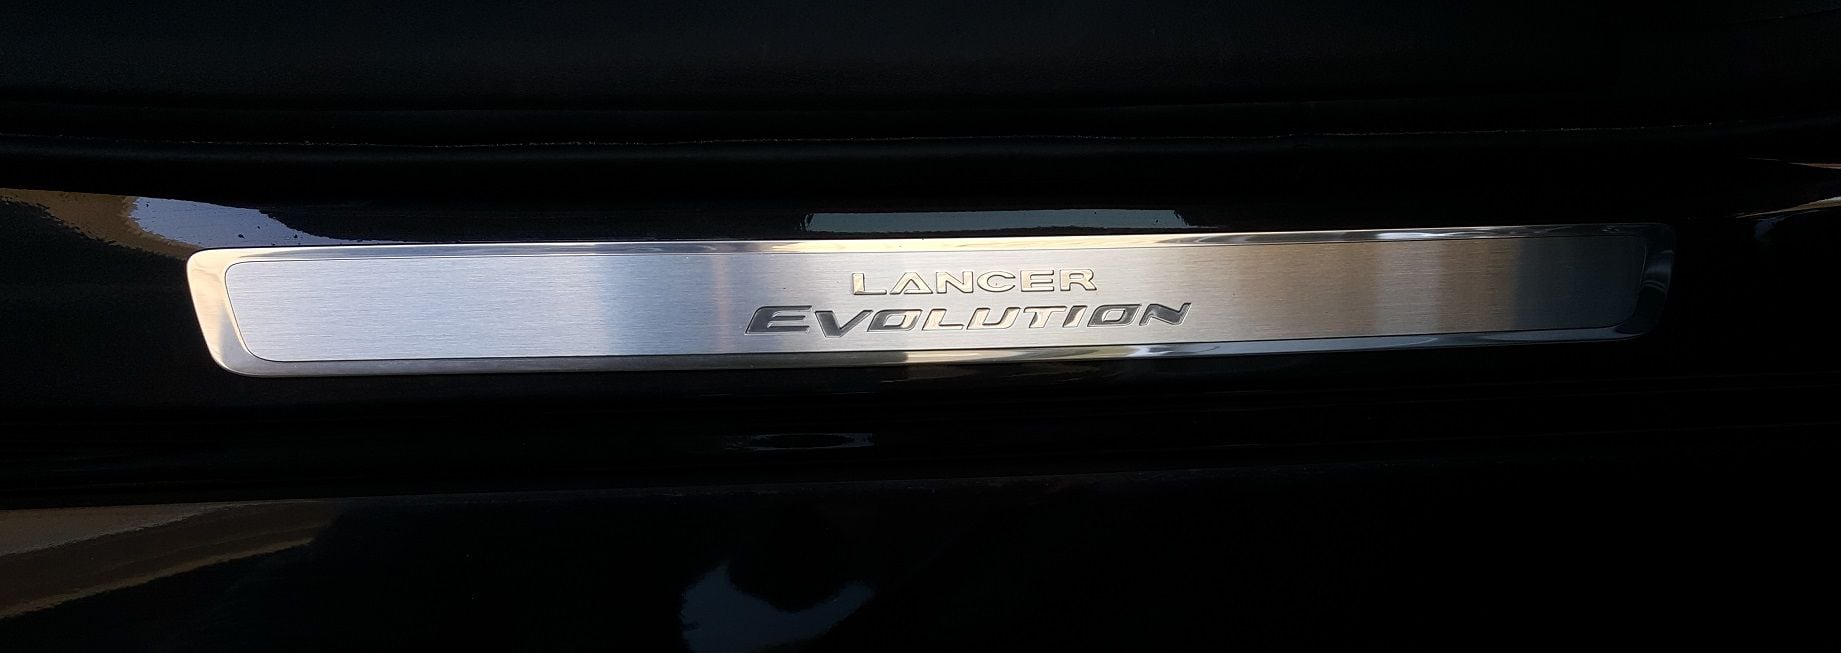 2010 Mitsubishi Lancer Evolution - FS: 2010 Evolution X MR - 10,900 miles - Used - VIN JA32W5FVXAU017226 - 4 cyl - AWD - Automatic - Sedan - Black - North Ridgeville, OH 44039, United States